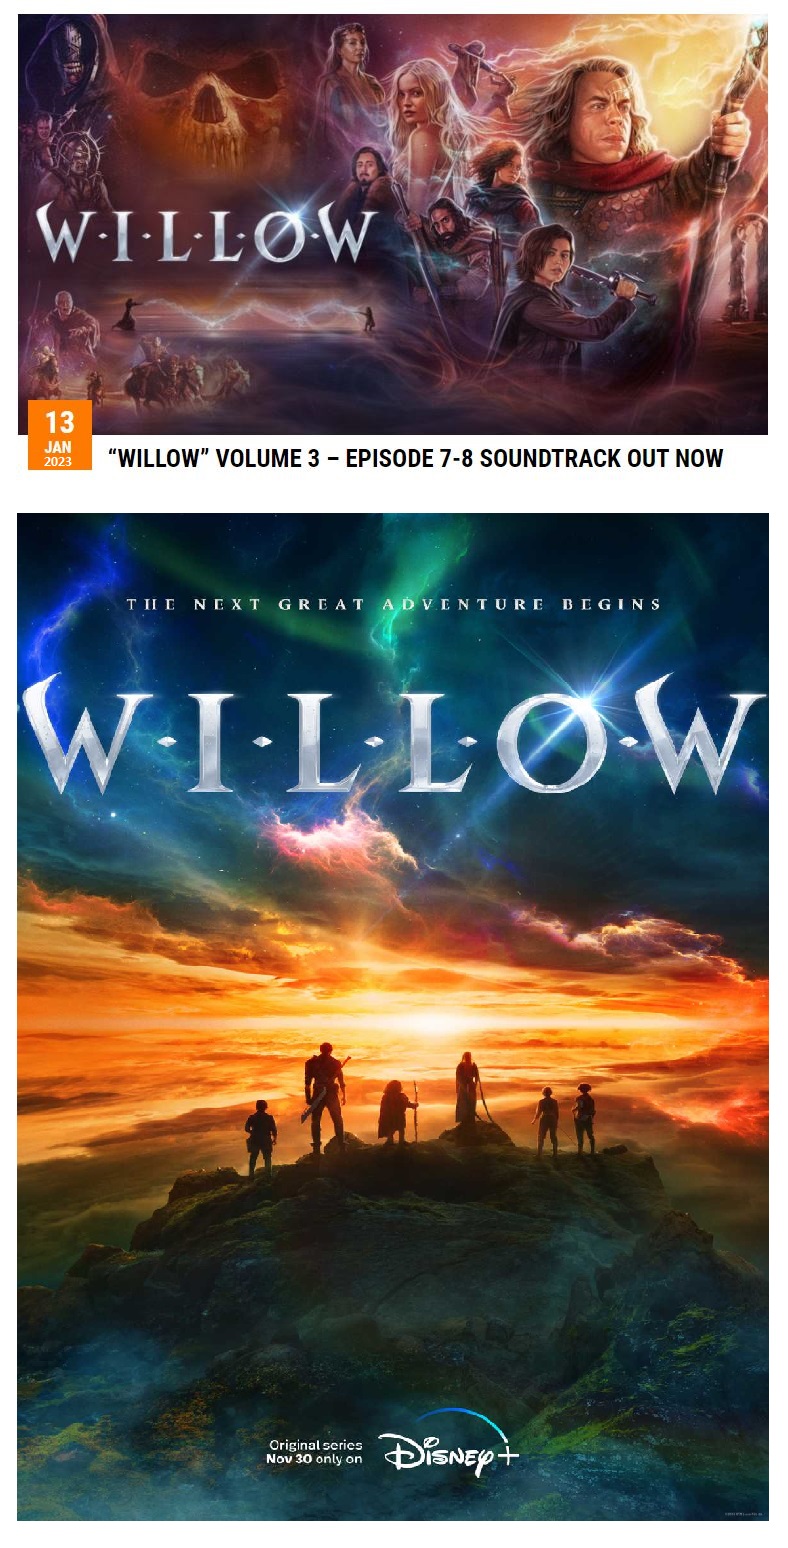 Willow Volume 3